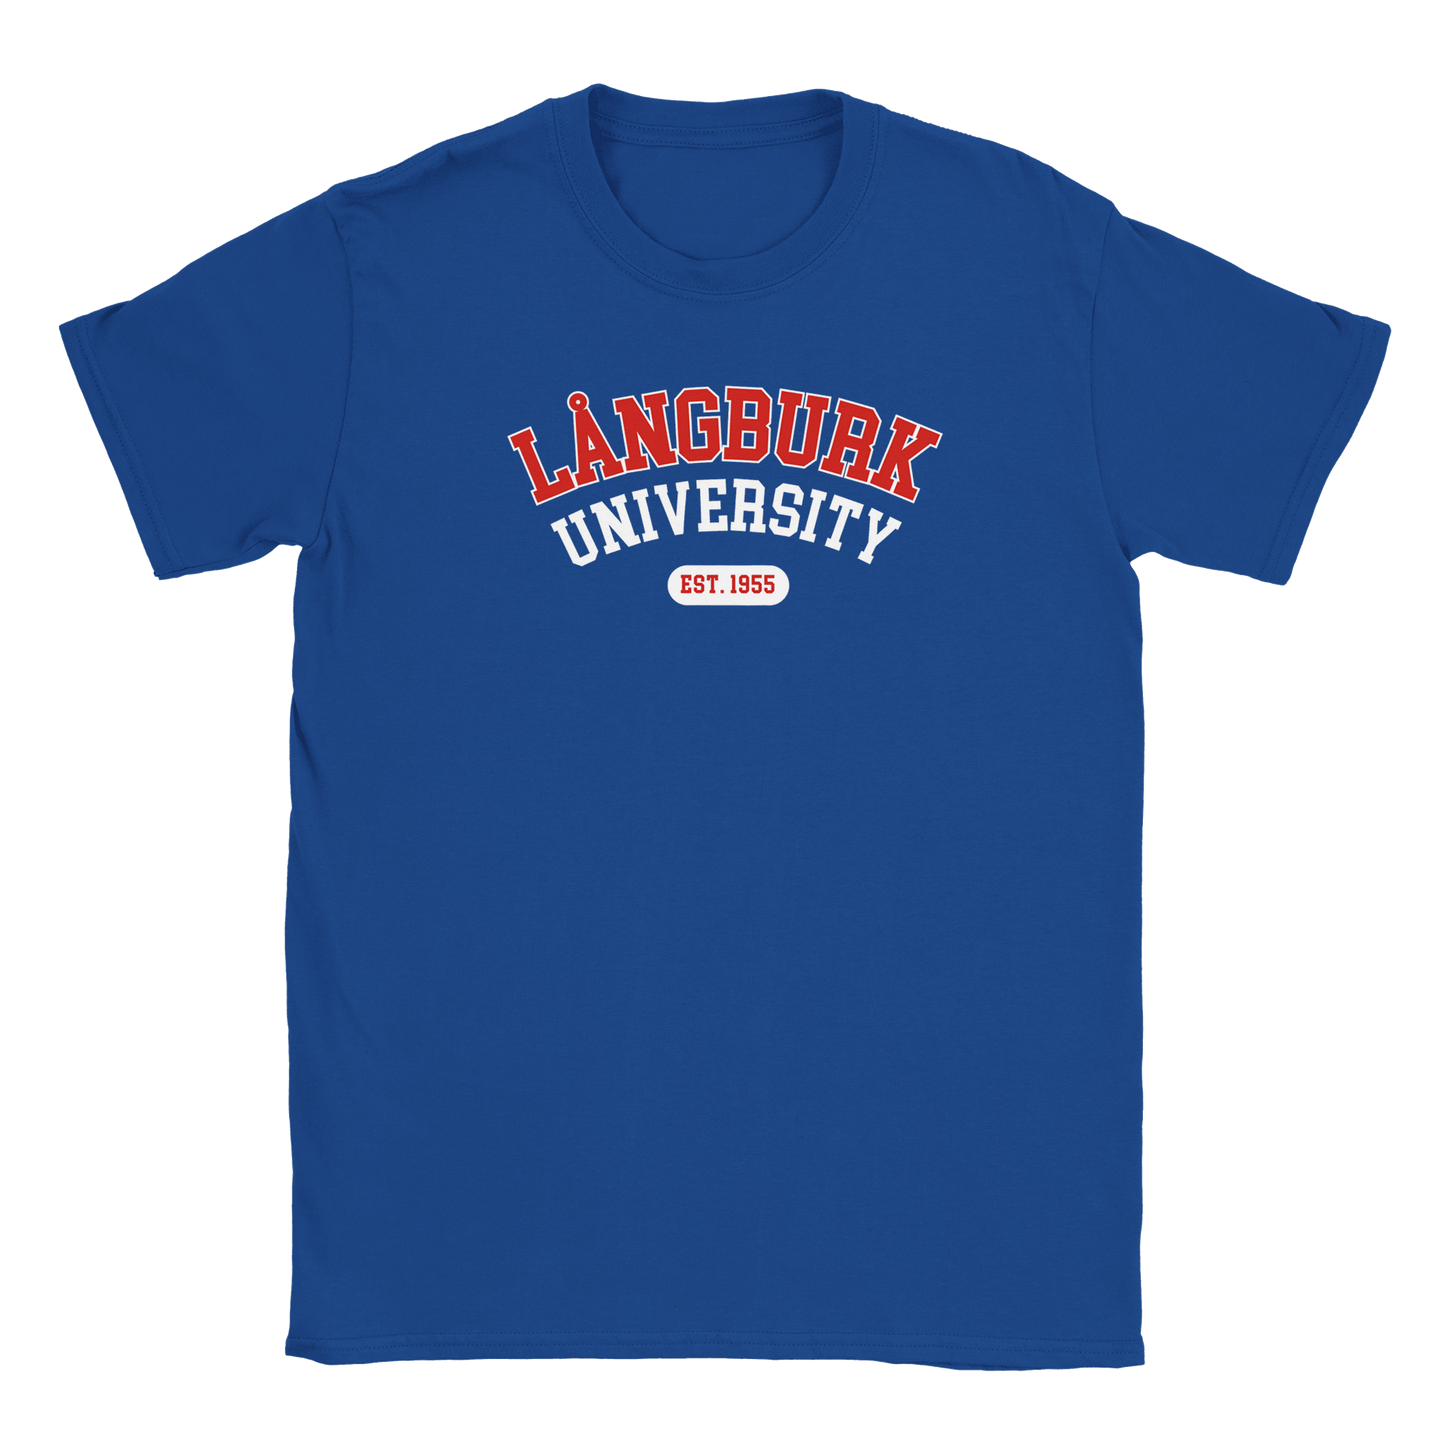 Långburk University Est. 1955 - T-shirt Blå